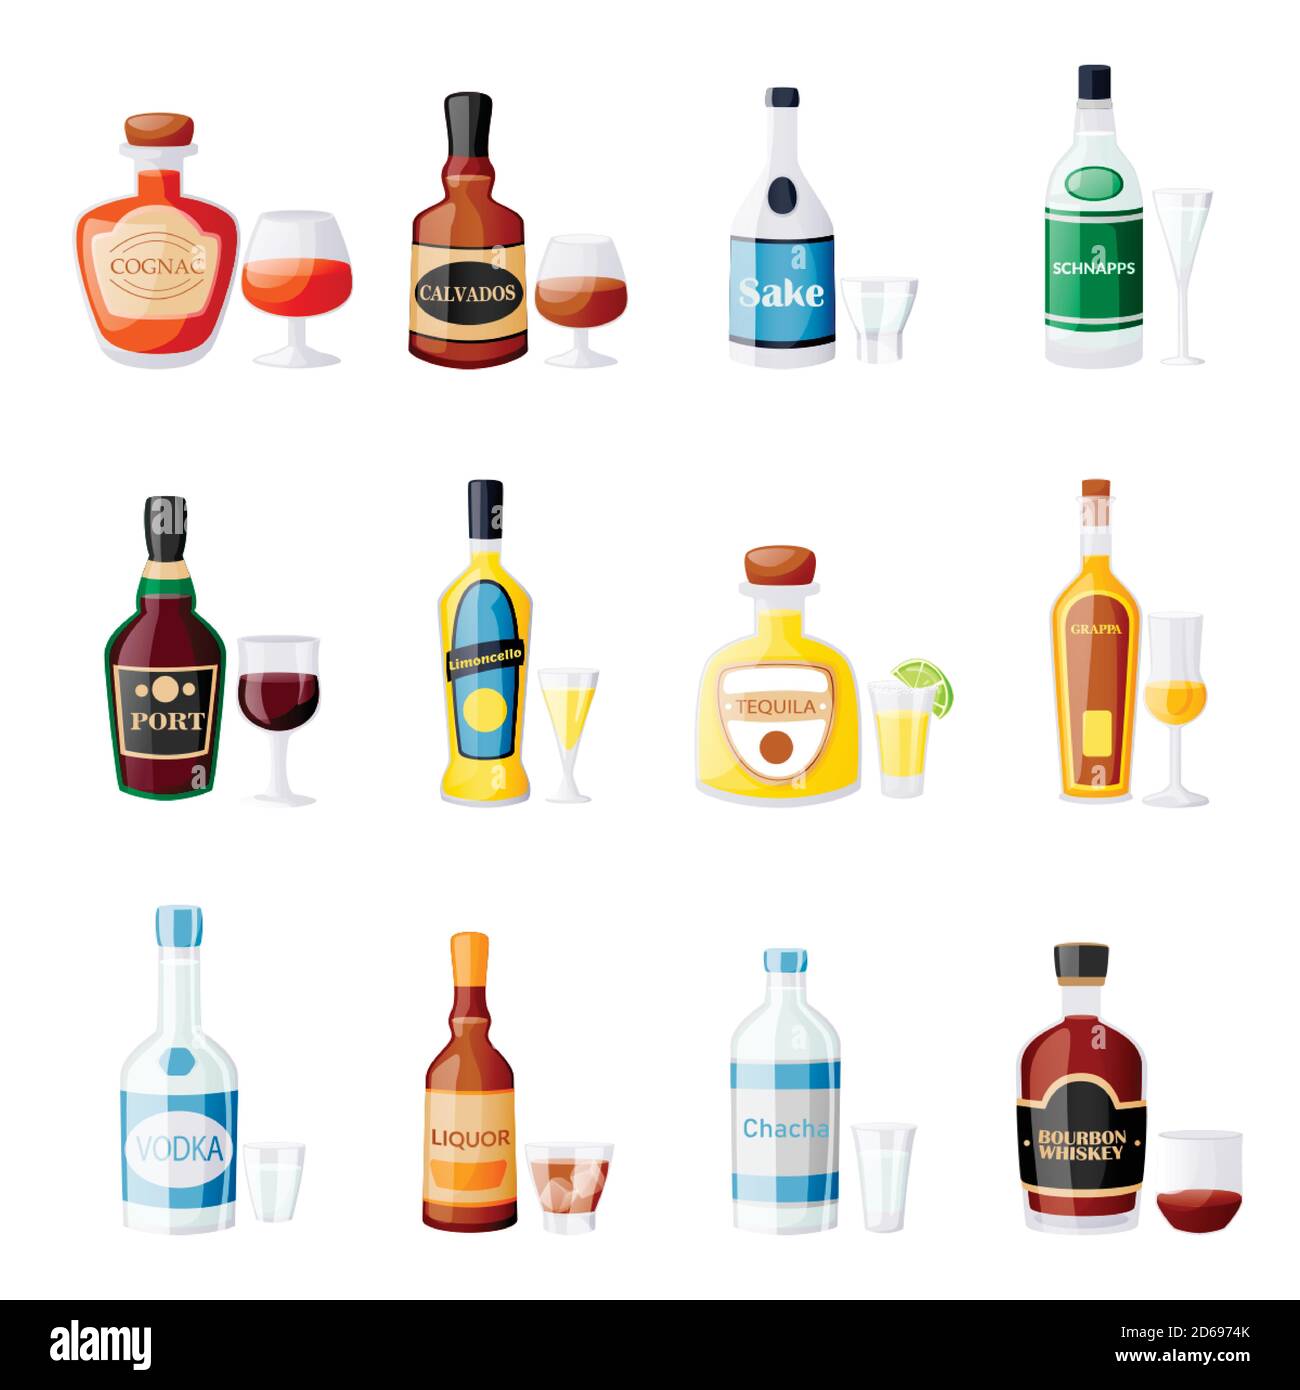 Alcohol drink bottles and glasses. Vector flat cartoon isolated illustration. Bar menu design elements. Liquor, bourbon, wine, tequila, port icons set Stock Vector